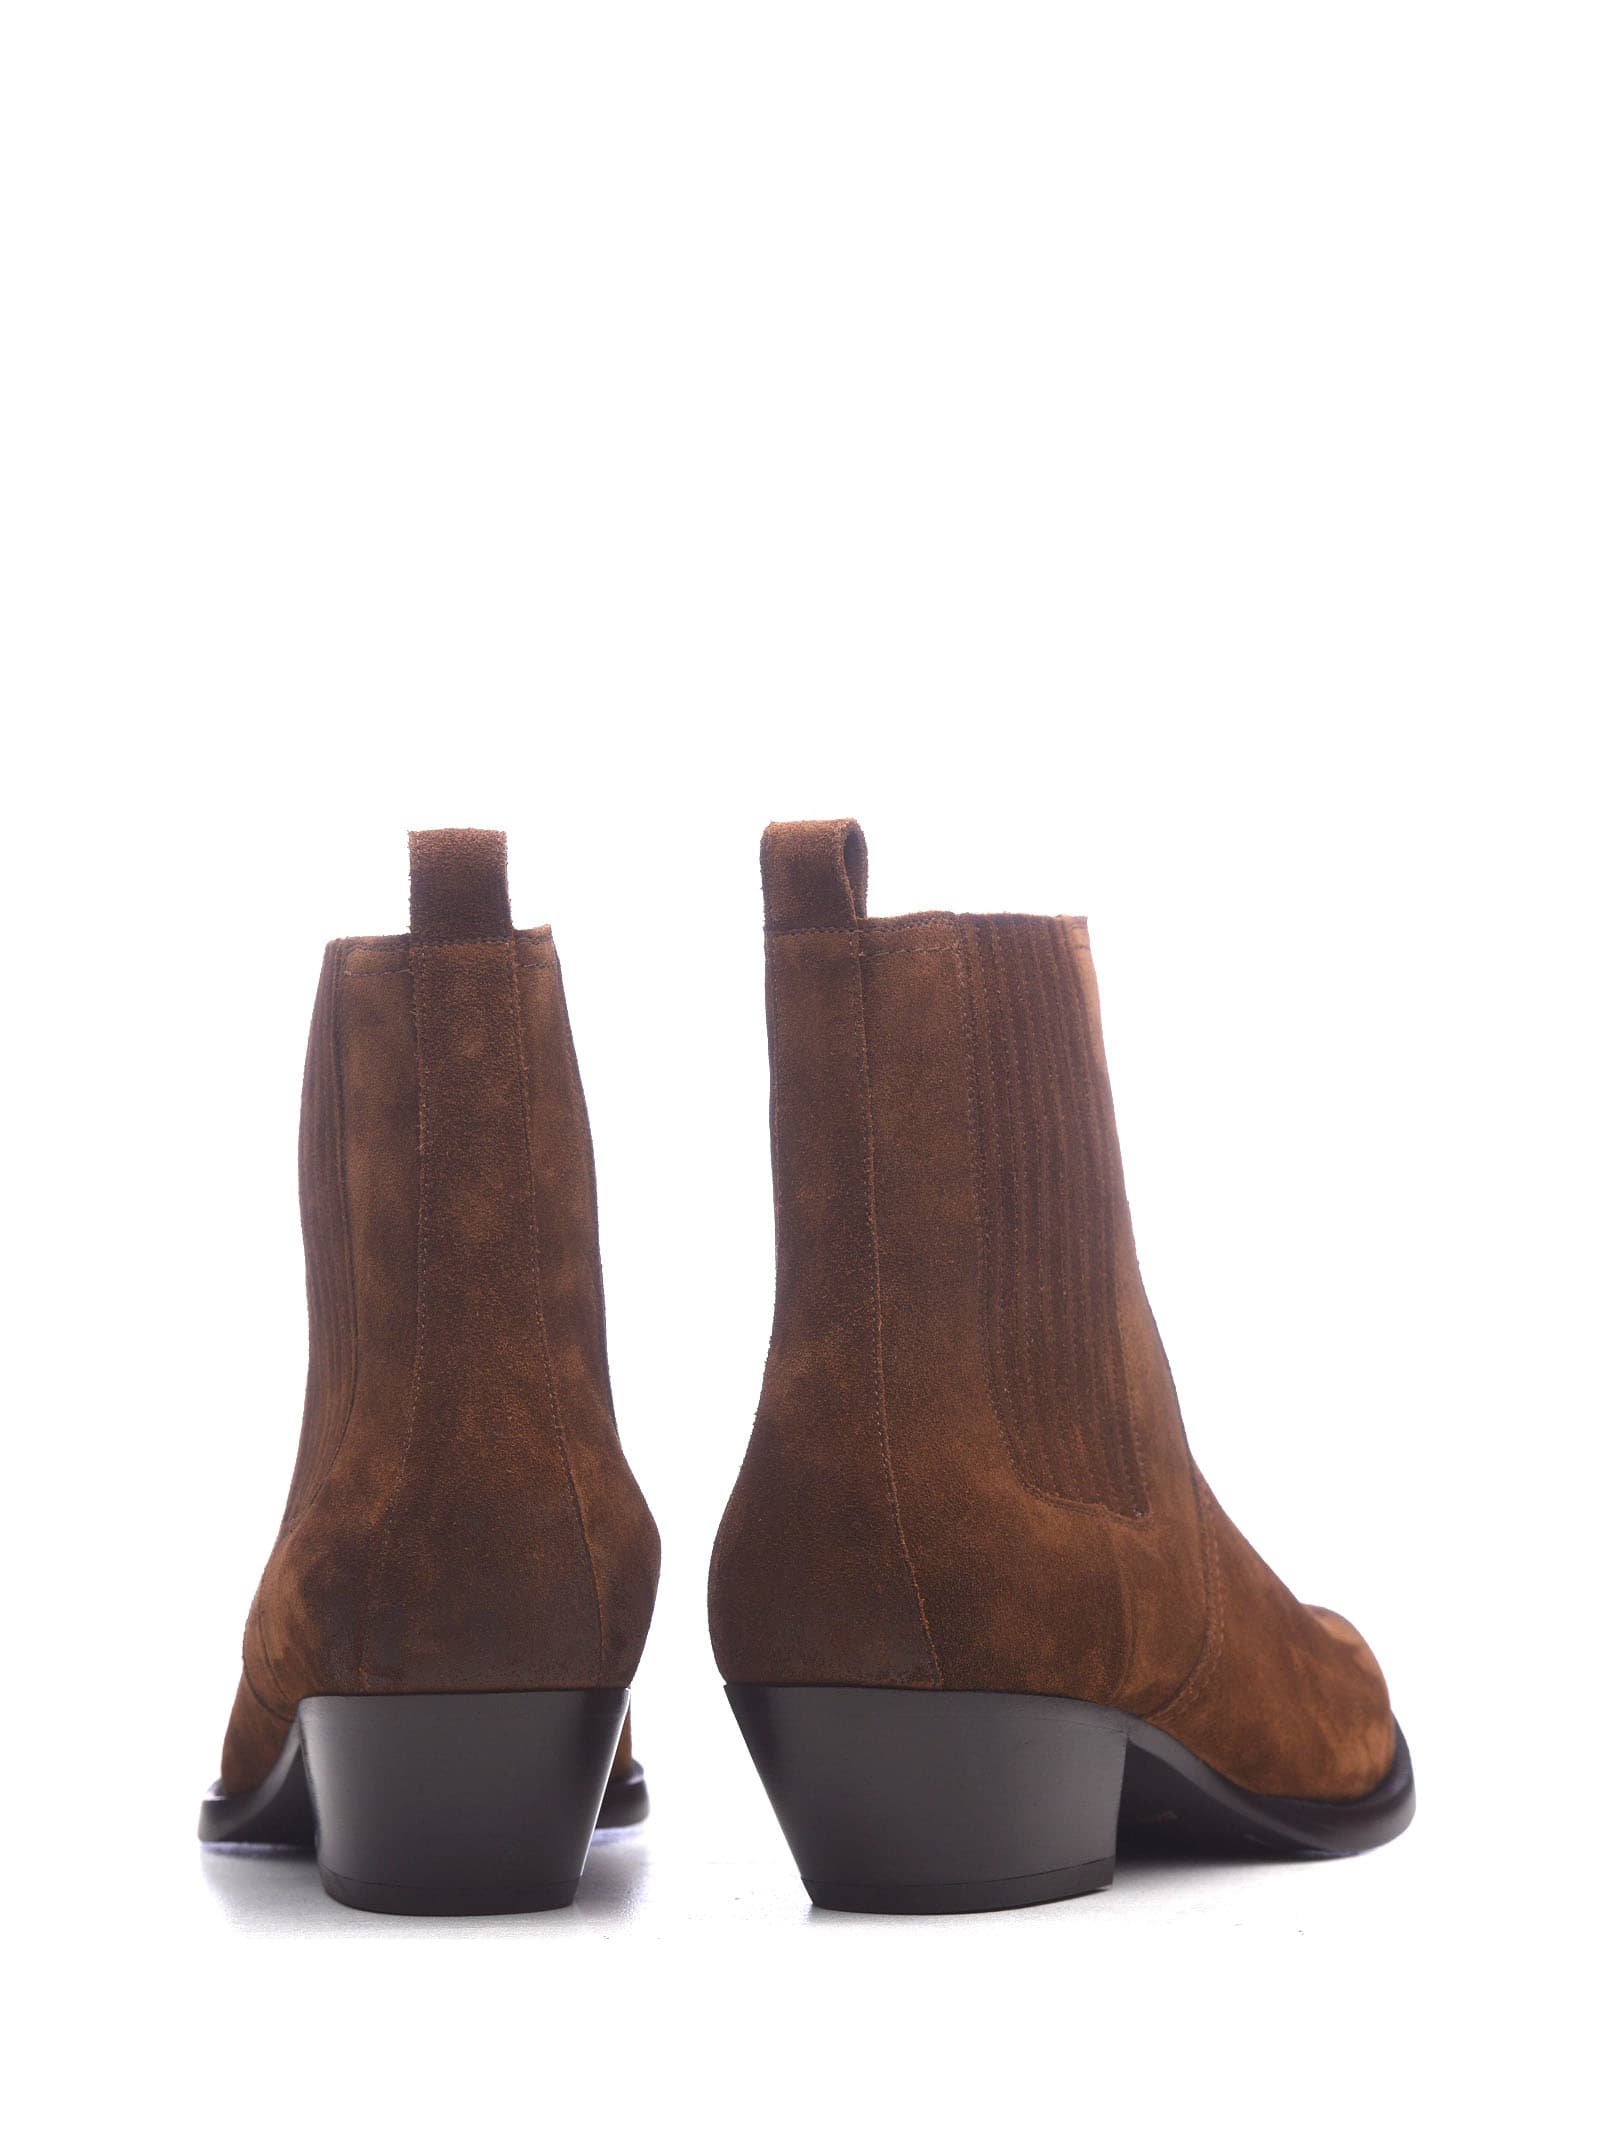 womens hunter original block heel chelsea yard snow wellingtons boots